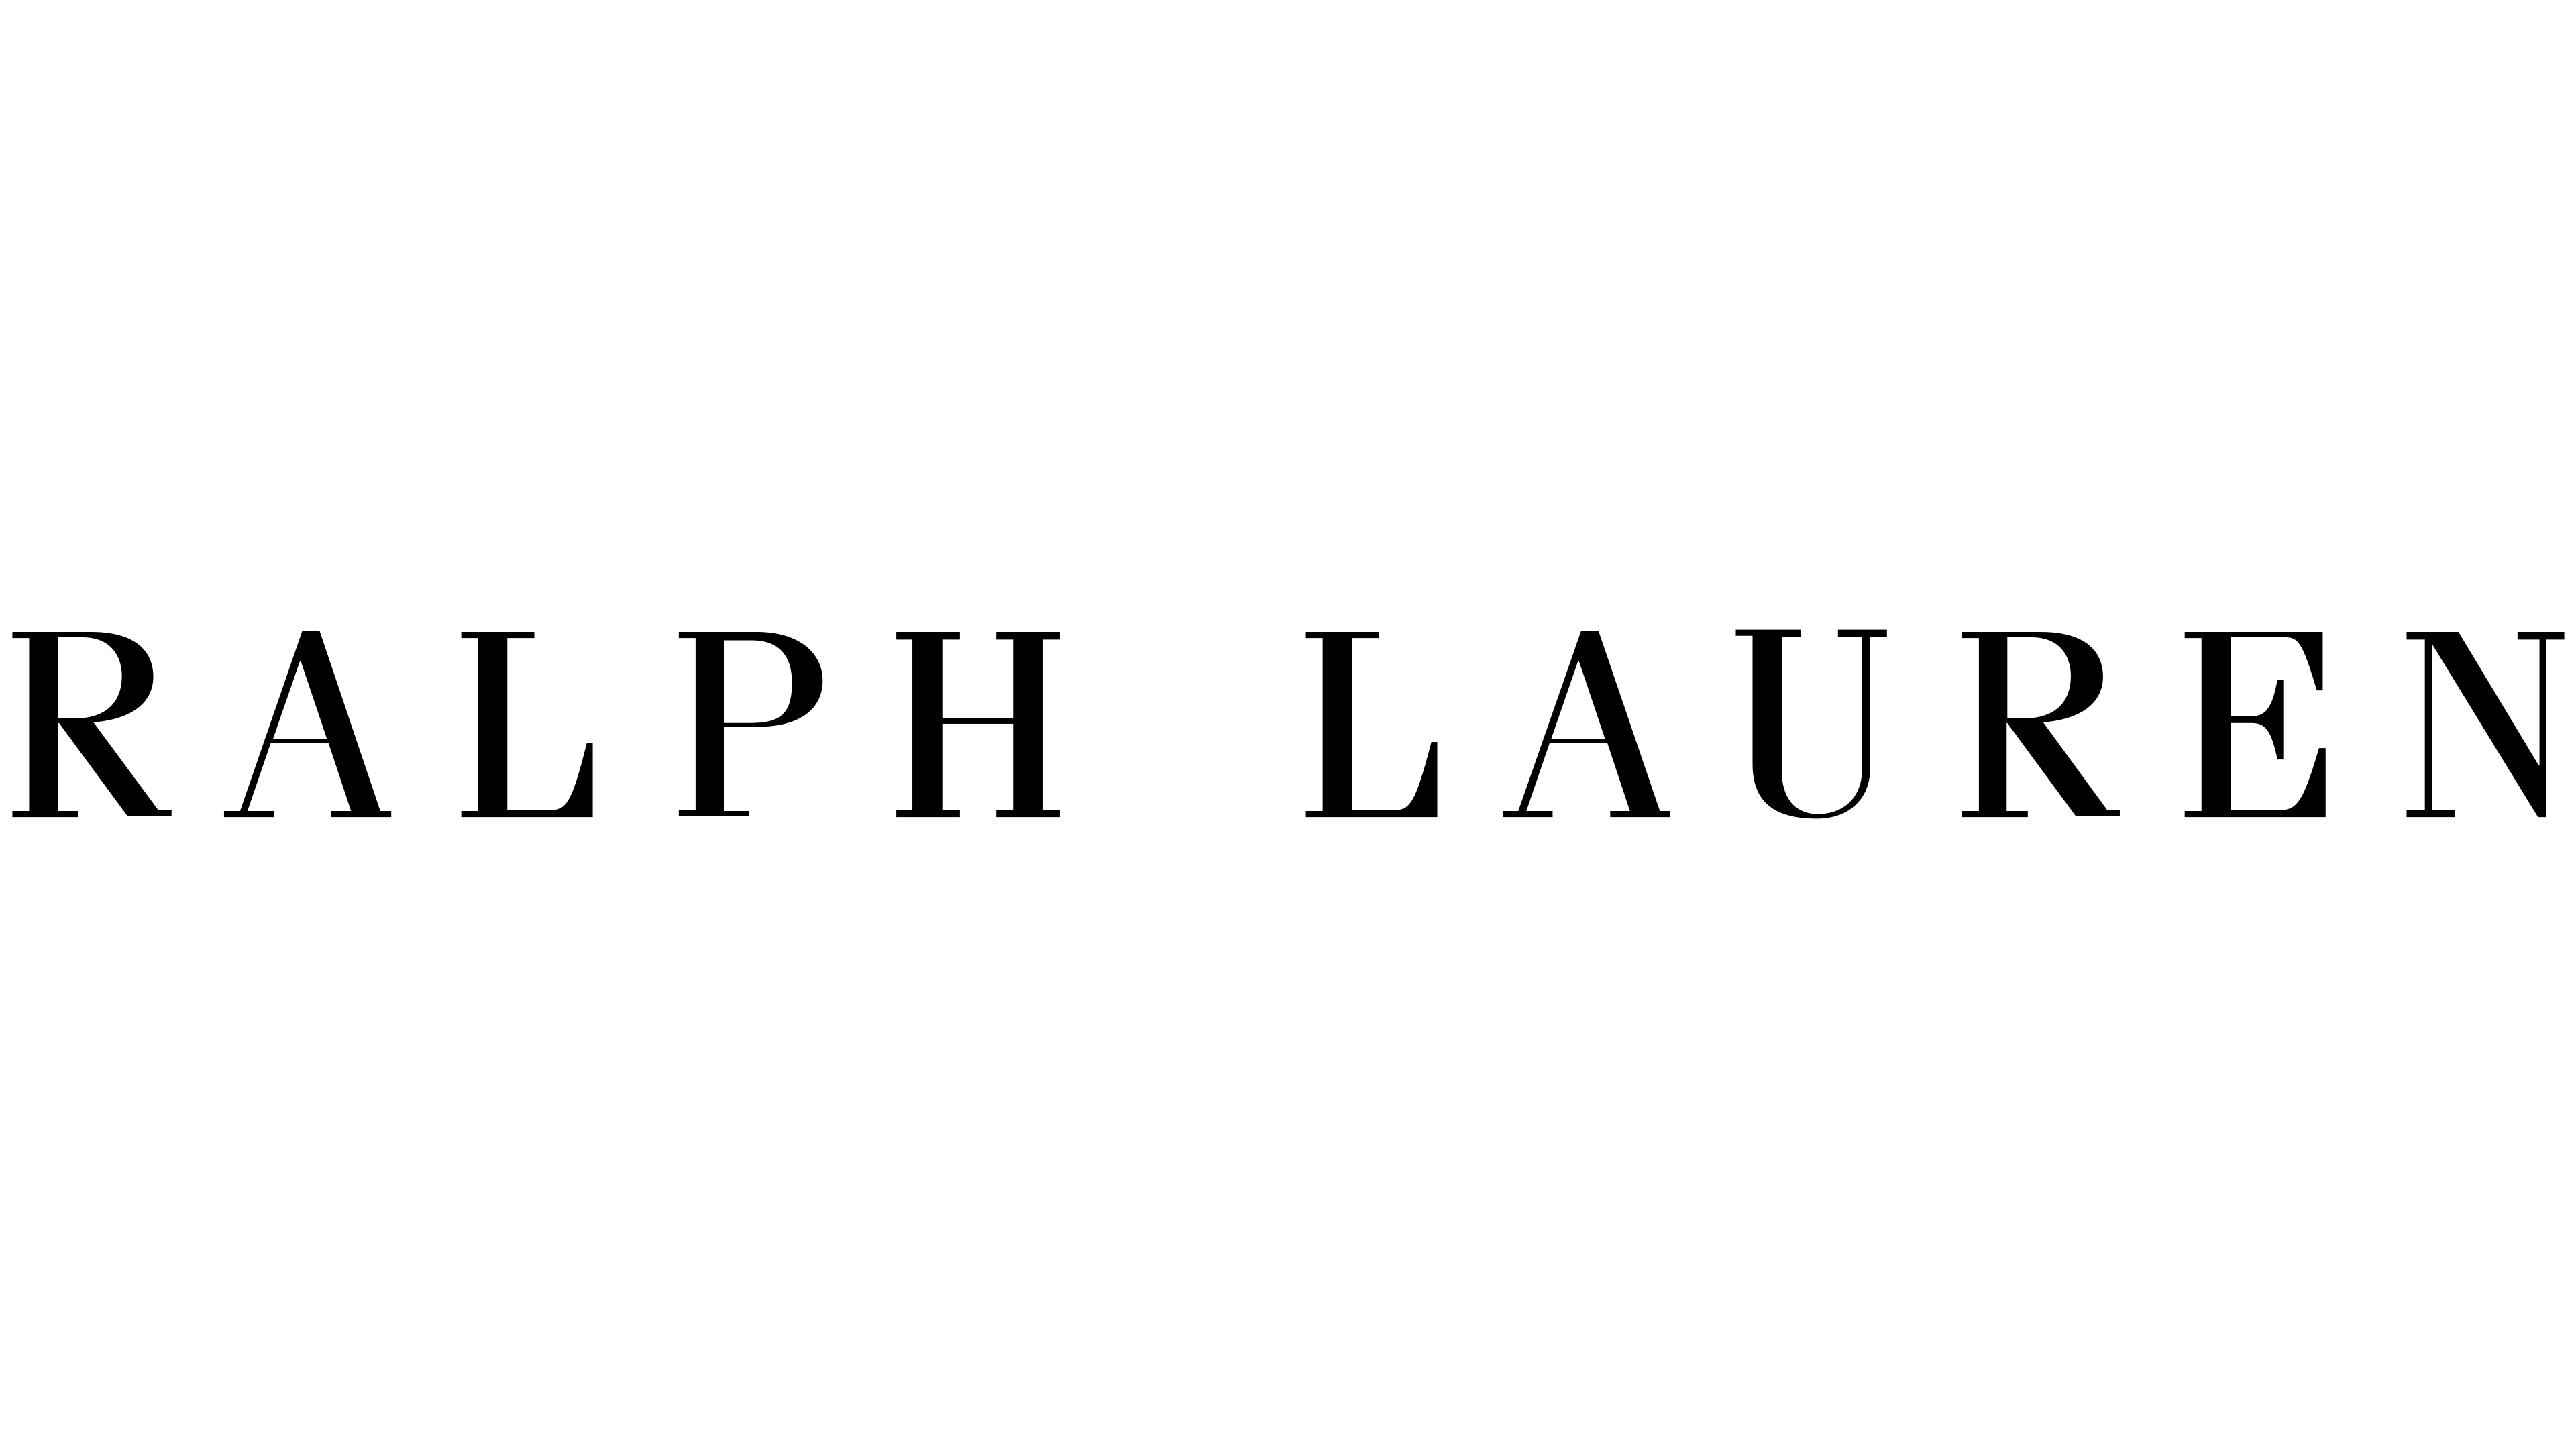 Logo Ralph Lauren 